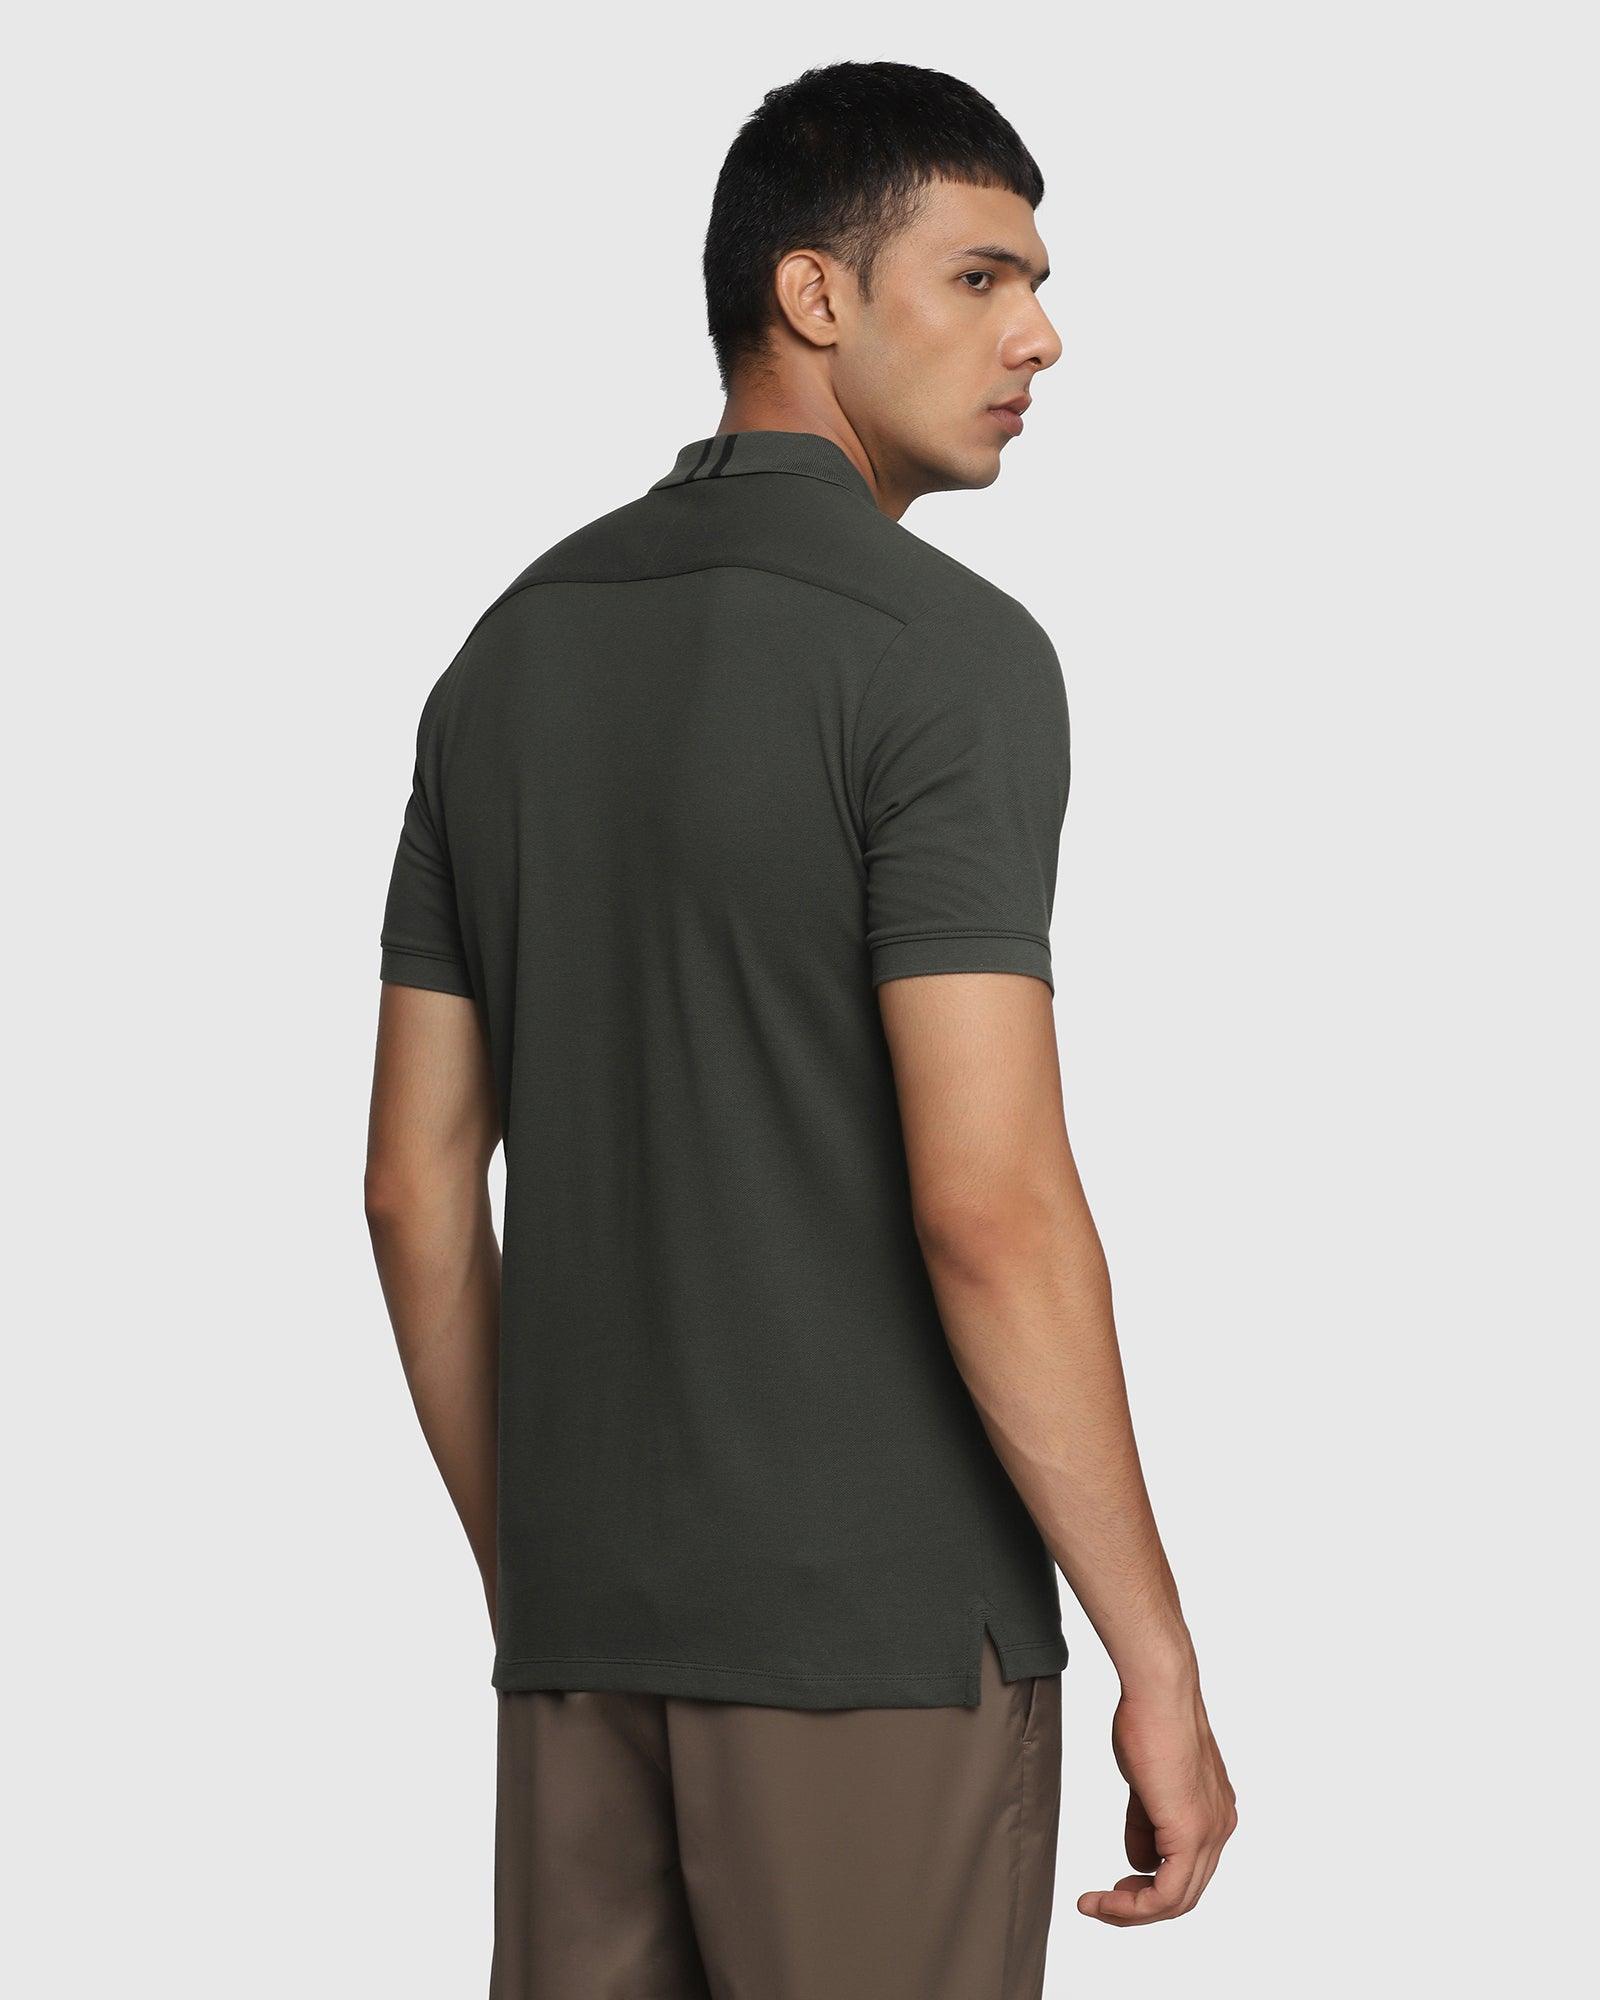 TechPro Polo Olive Solid T Shirt - Luke